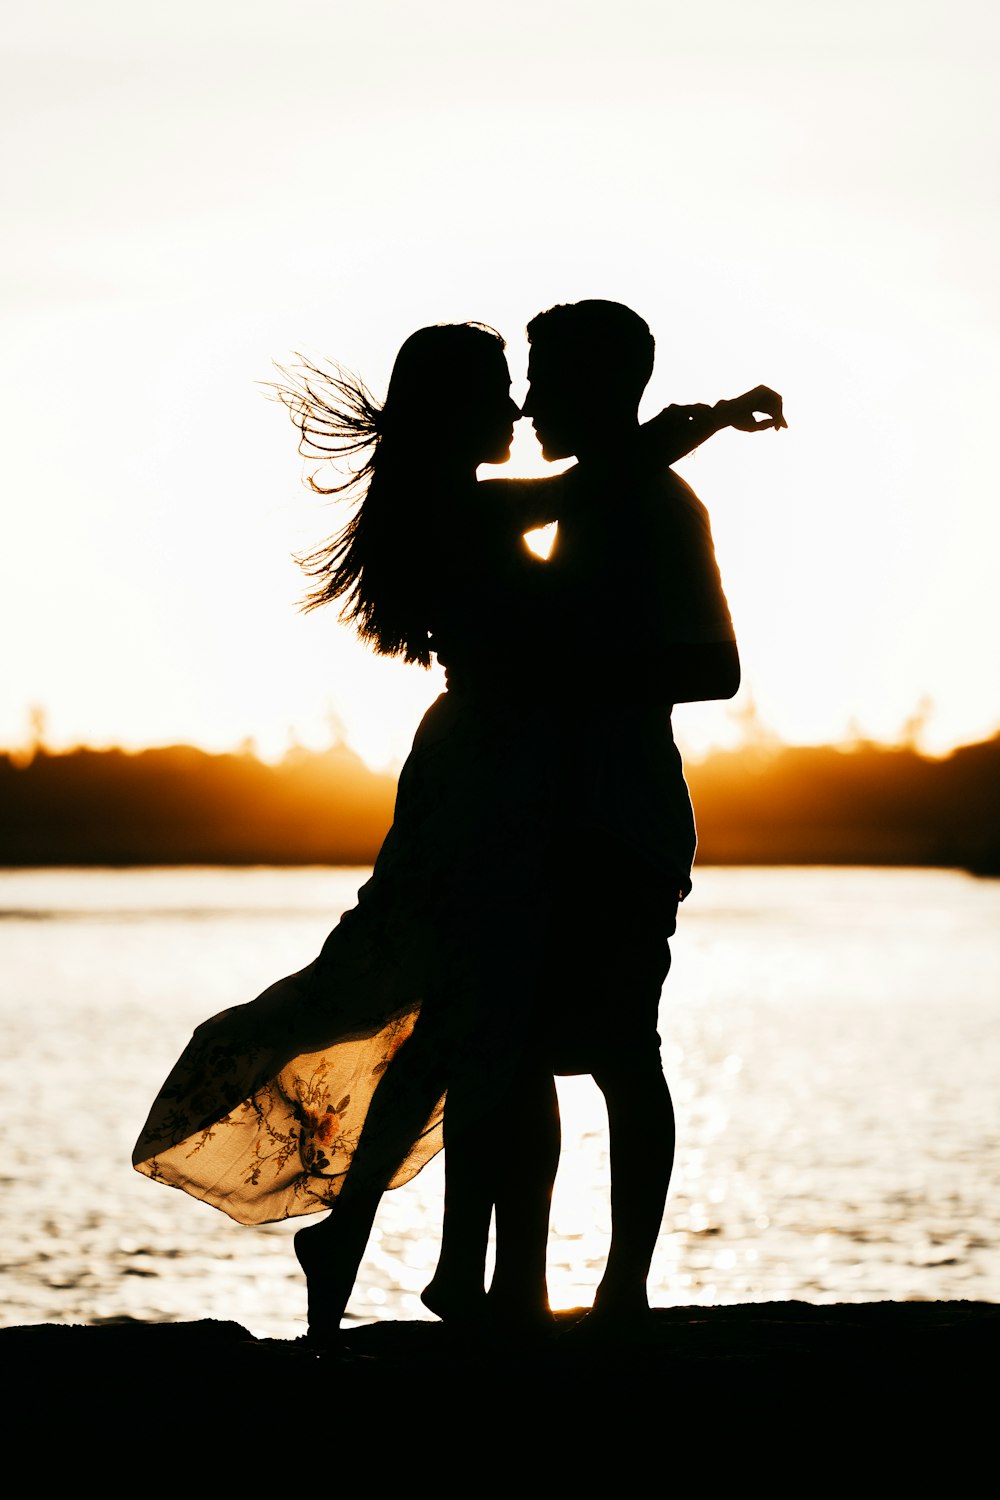 350+ Romantic Couple Pictures | Download Free Images on Unsplash